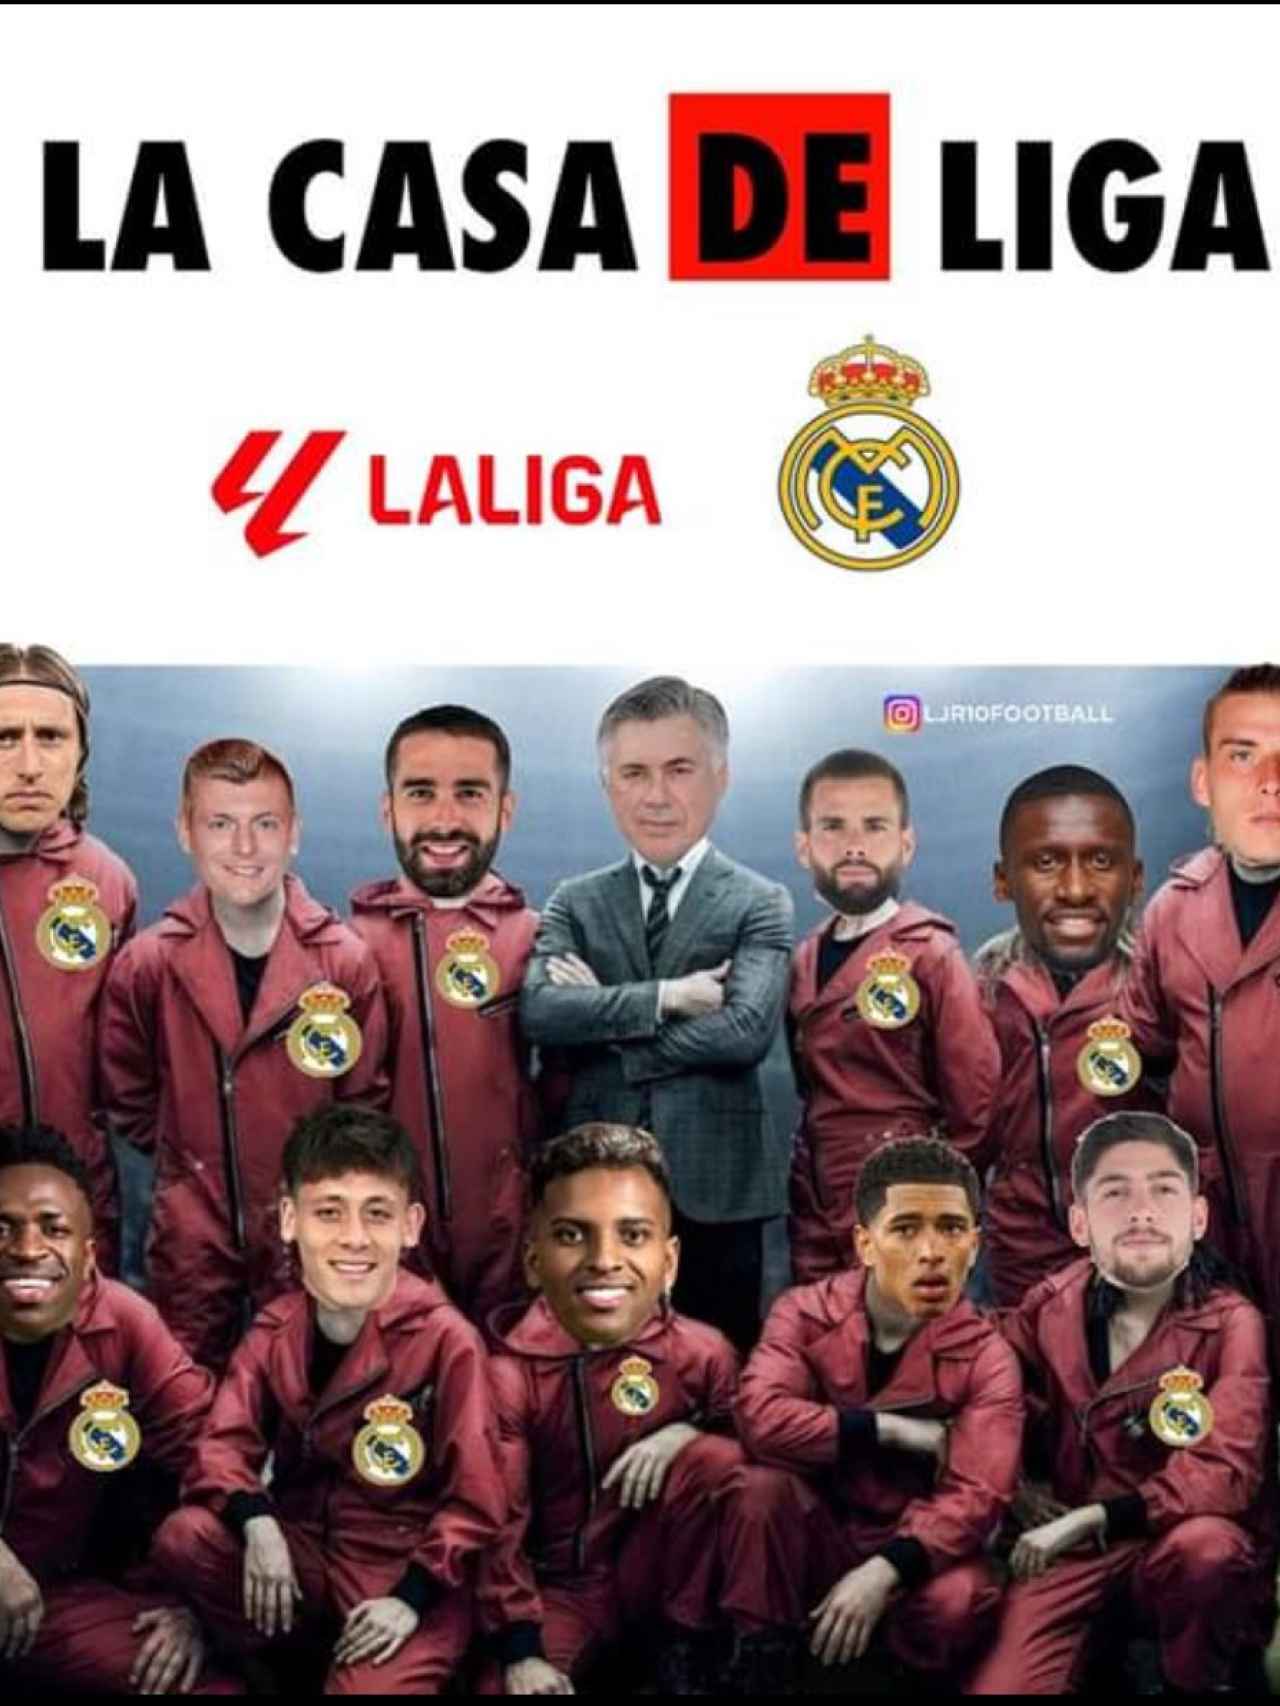 El meme viral del Real Madrid haciendo del elenco de la Casa de Papel